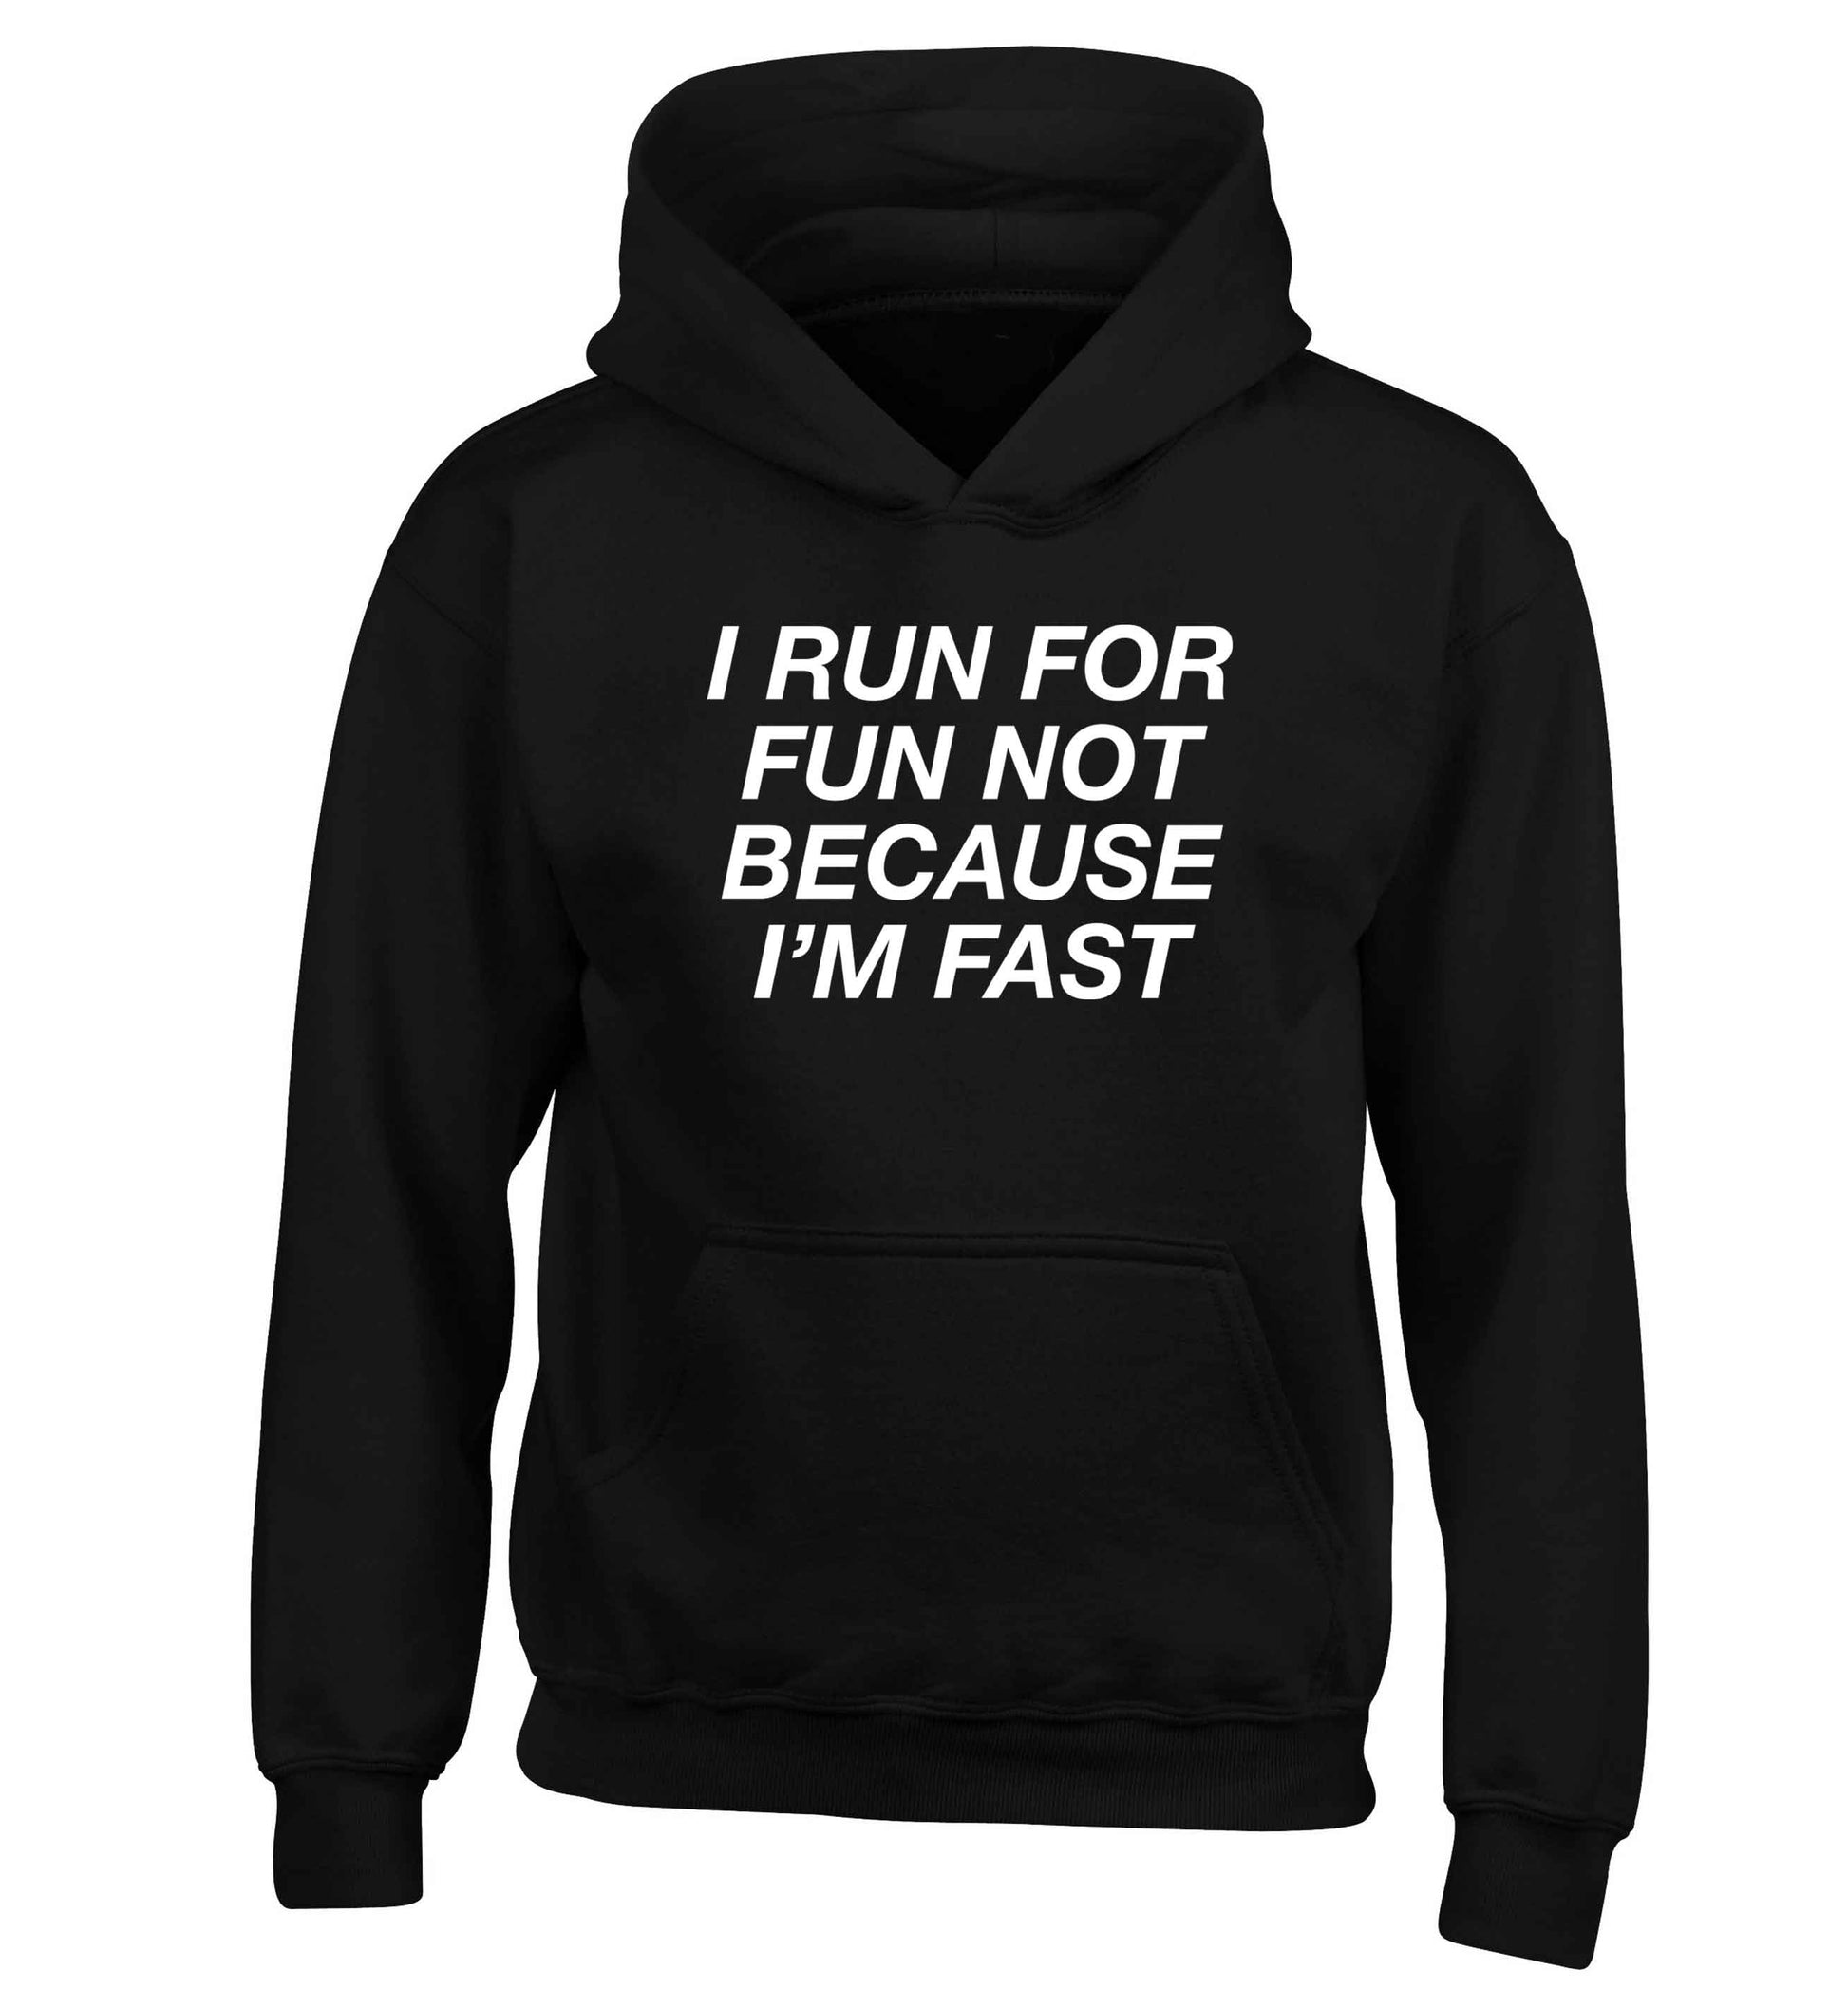 I run for fun not because I'm fast children's black hoodie 12-13 Years